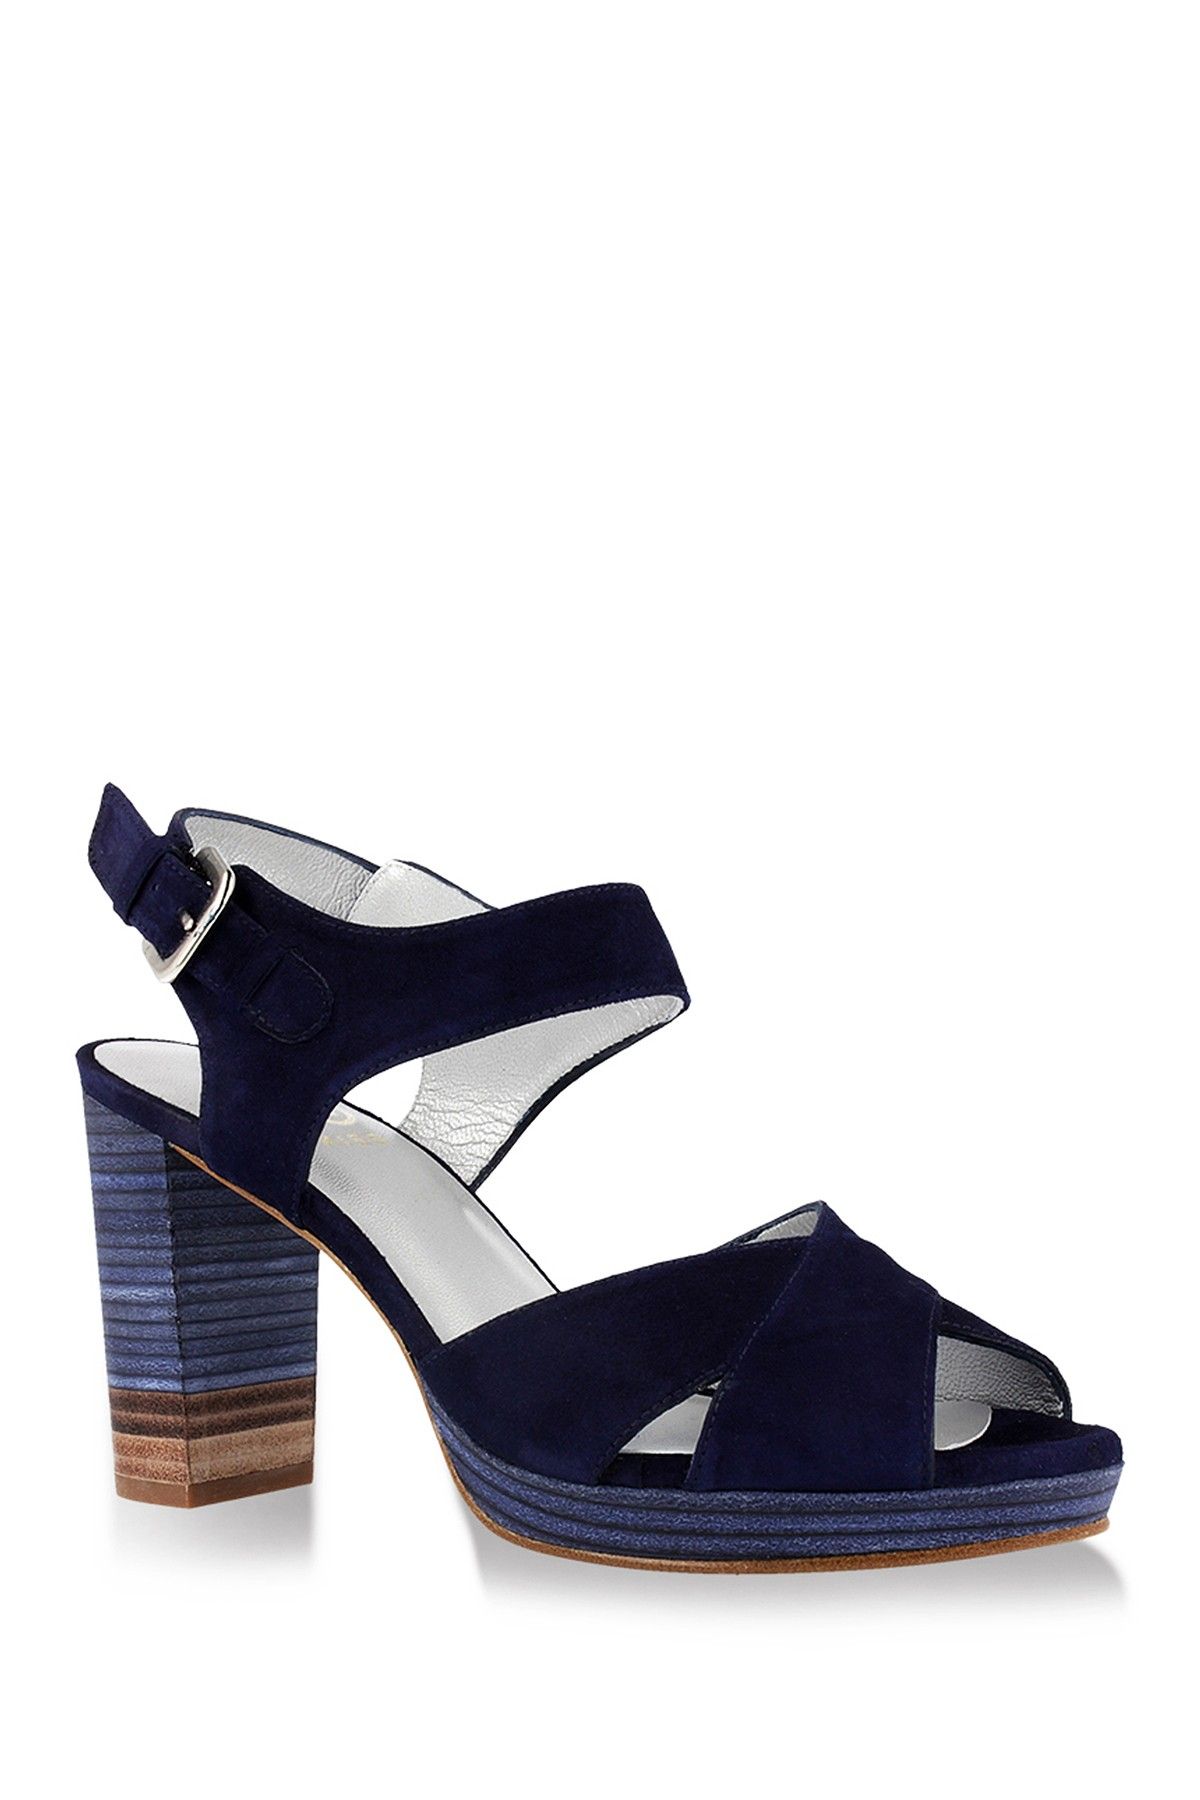 UKIES Tango Leather Ankle Strap Heel | Womens Fashion Street ...